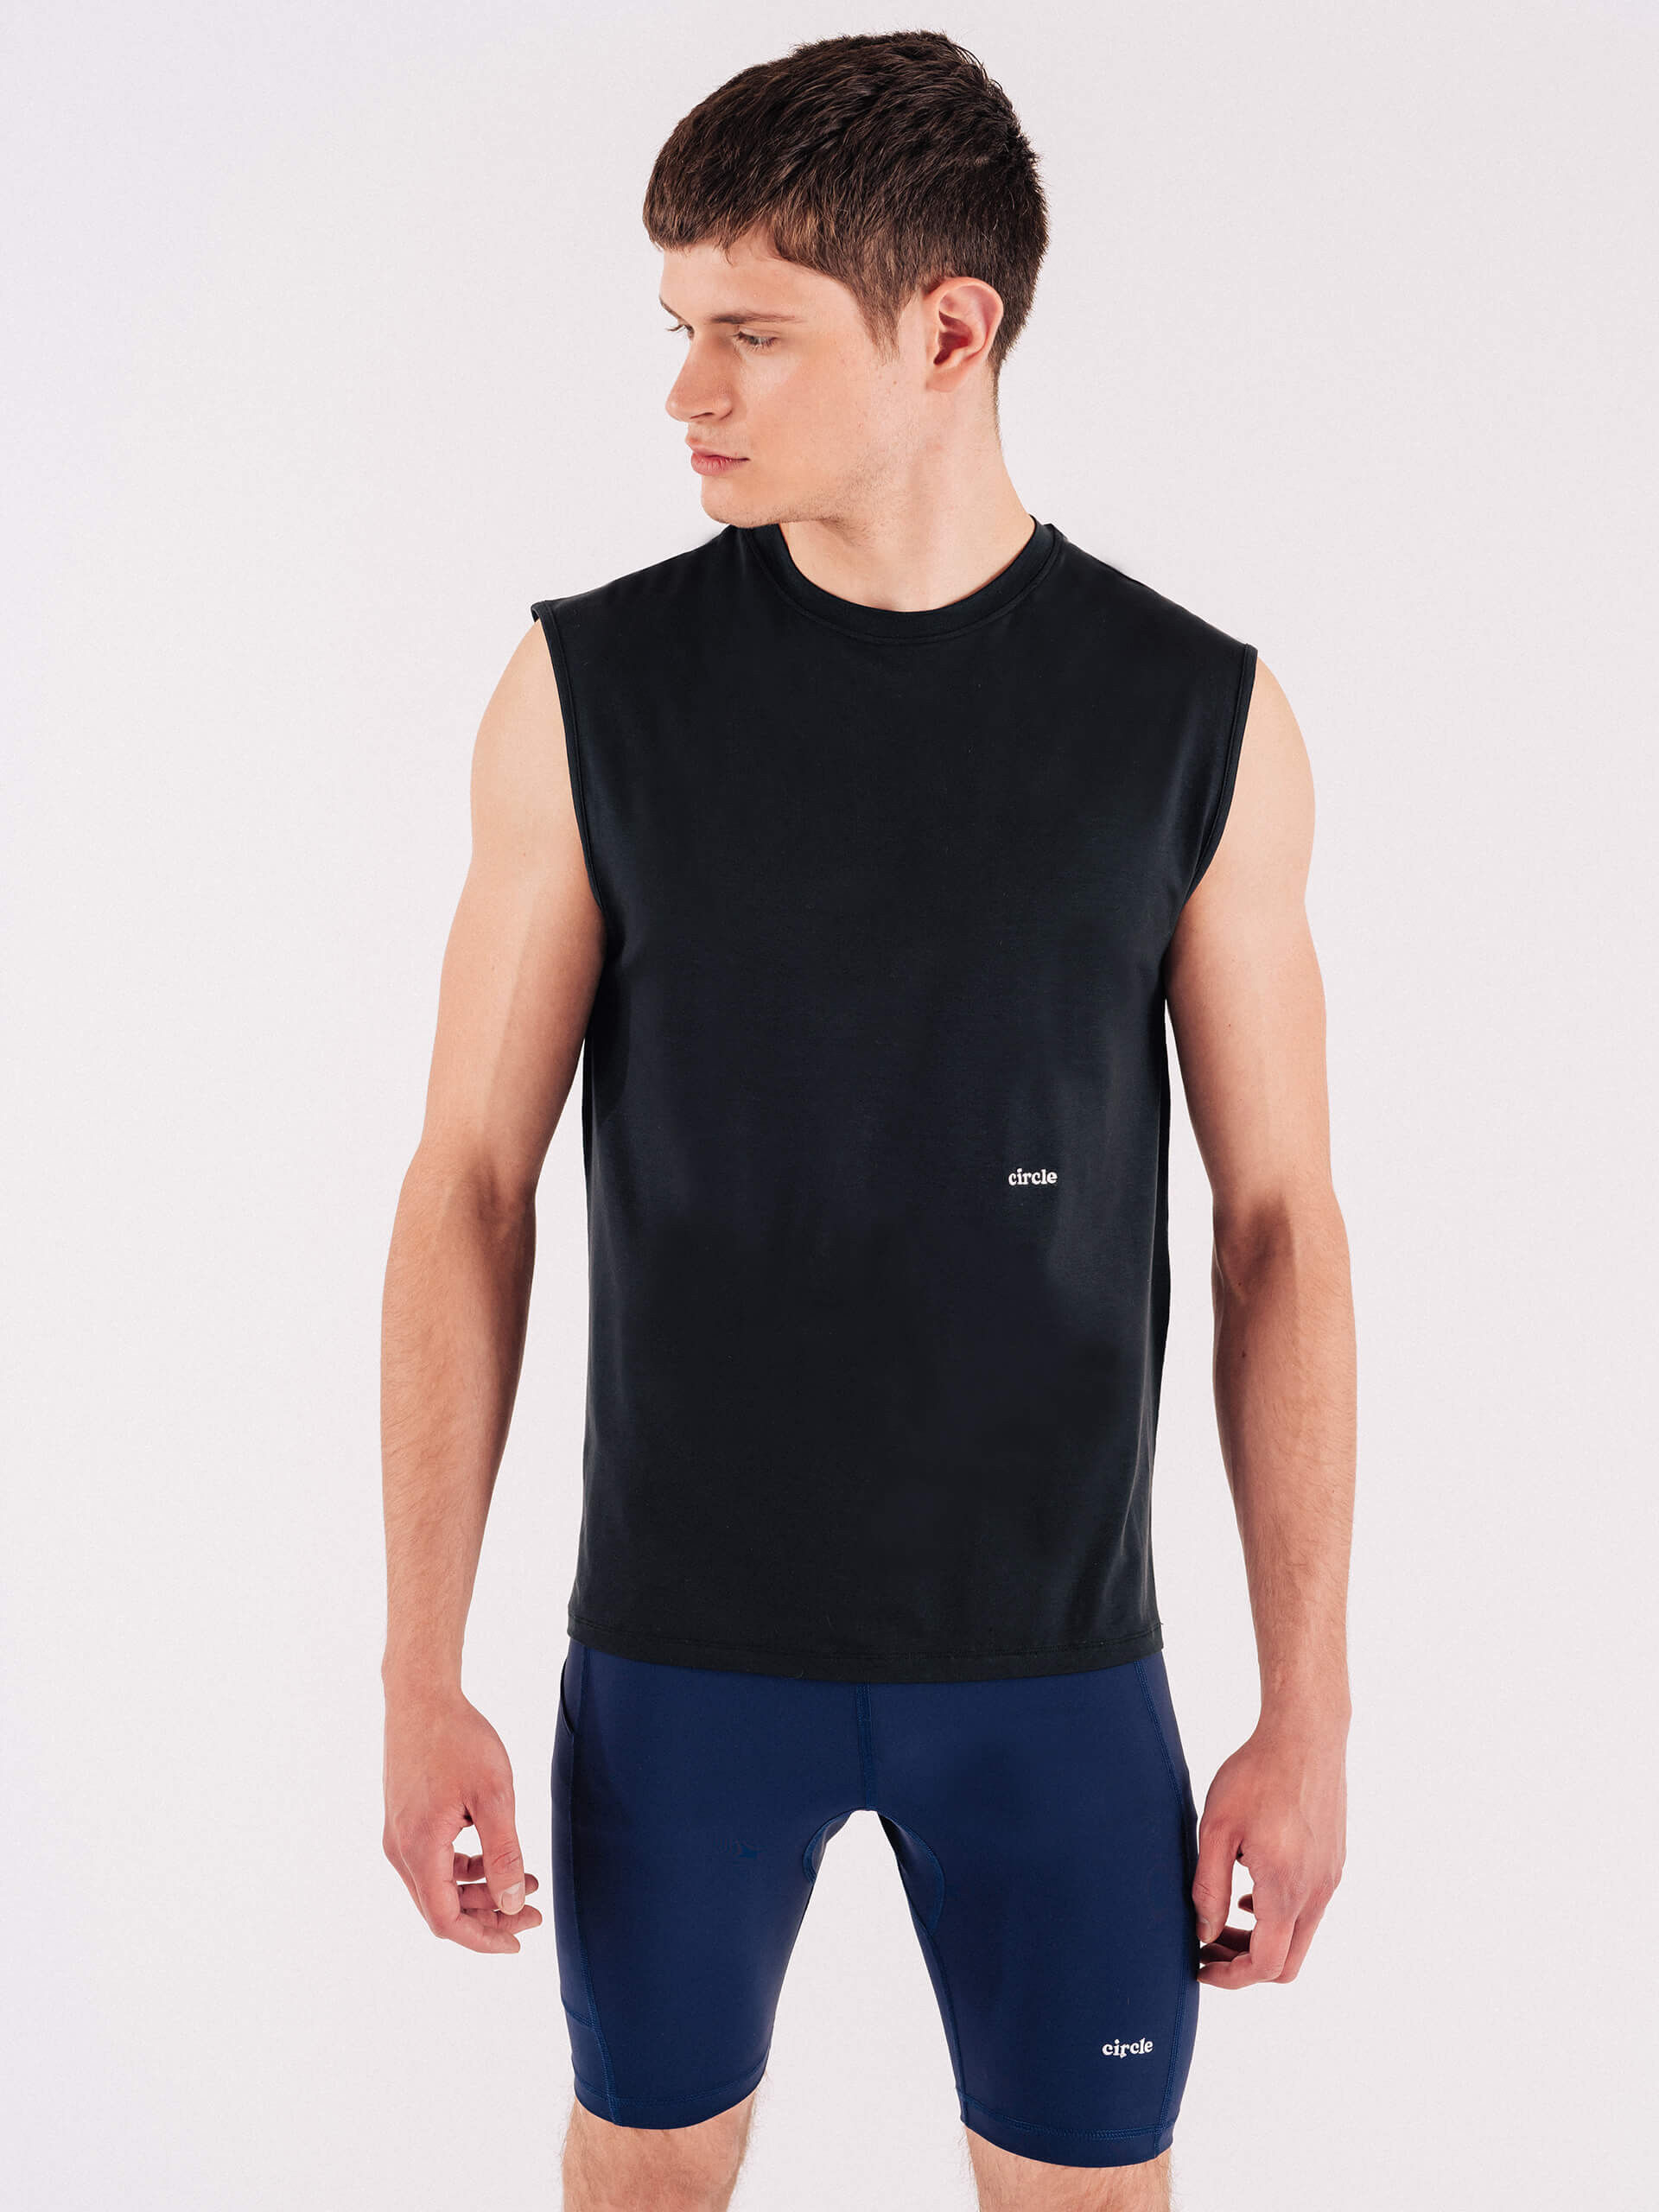 Circle Sportswear Muscle Tee - T-shirt homme | Hardloop